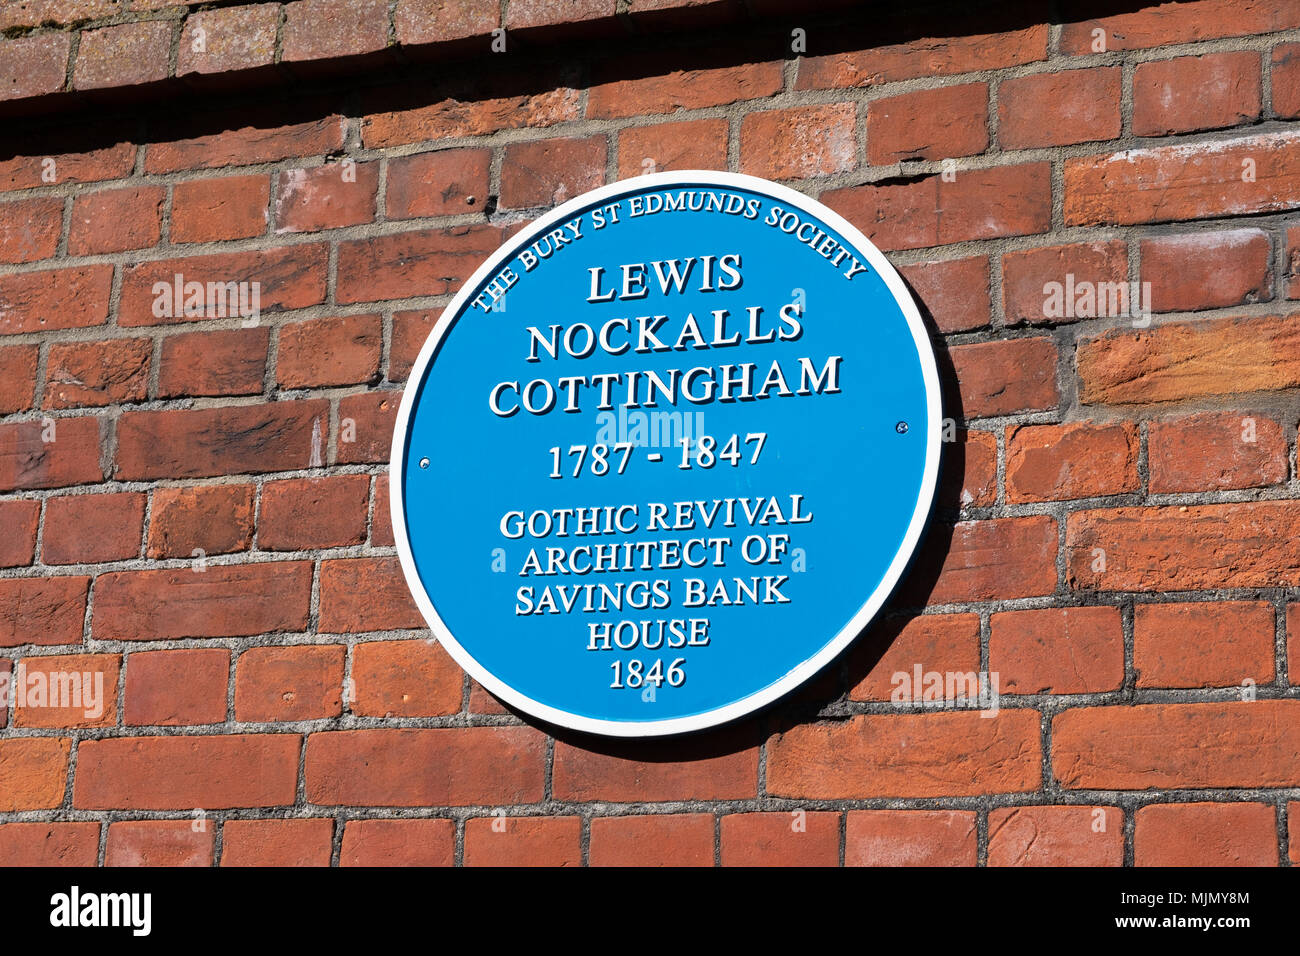 Lewis Nockalls Cottingham blaue Plakette Bury St Edmunds, Gothic Revival Architekt der Sparkasse Haus 1846. Stockfoto